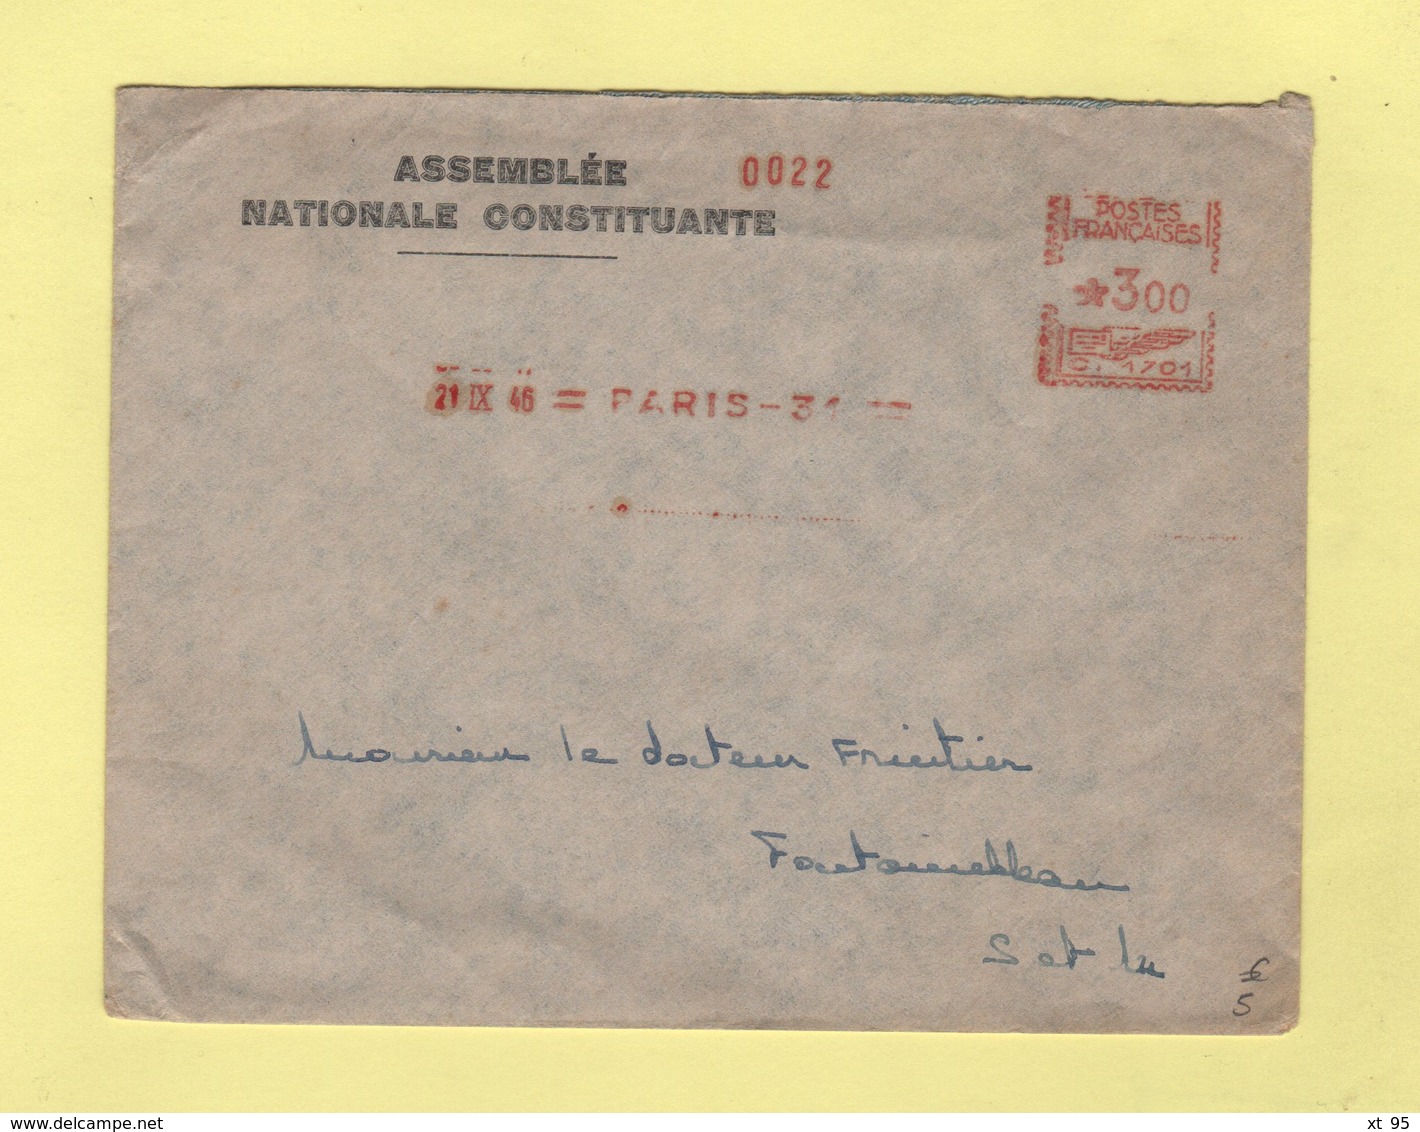 EMA - Machine C - Paris - 21-9-1946 - Assemblee Nationale Constituante - EMA (Empreintes Machines à Affranchir)